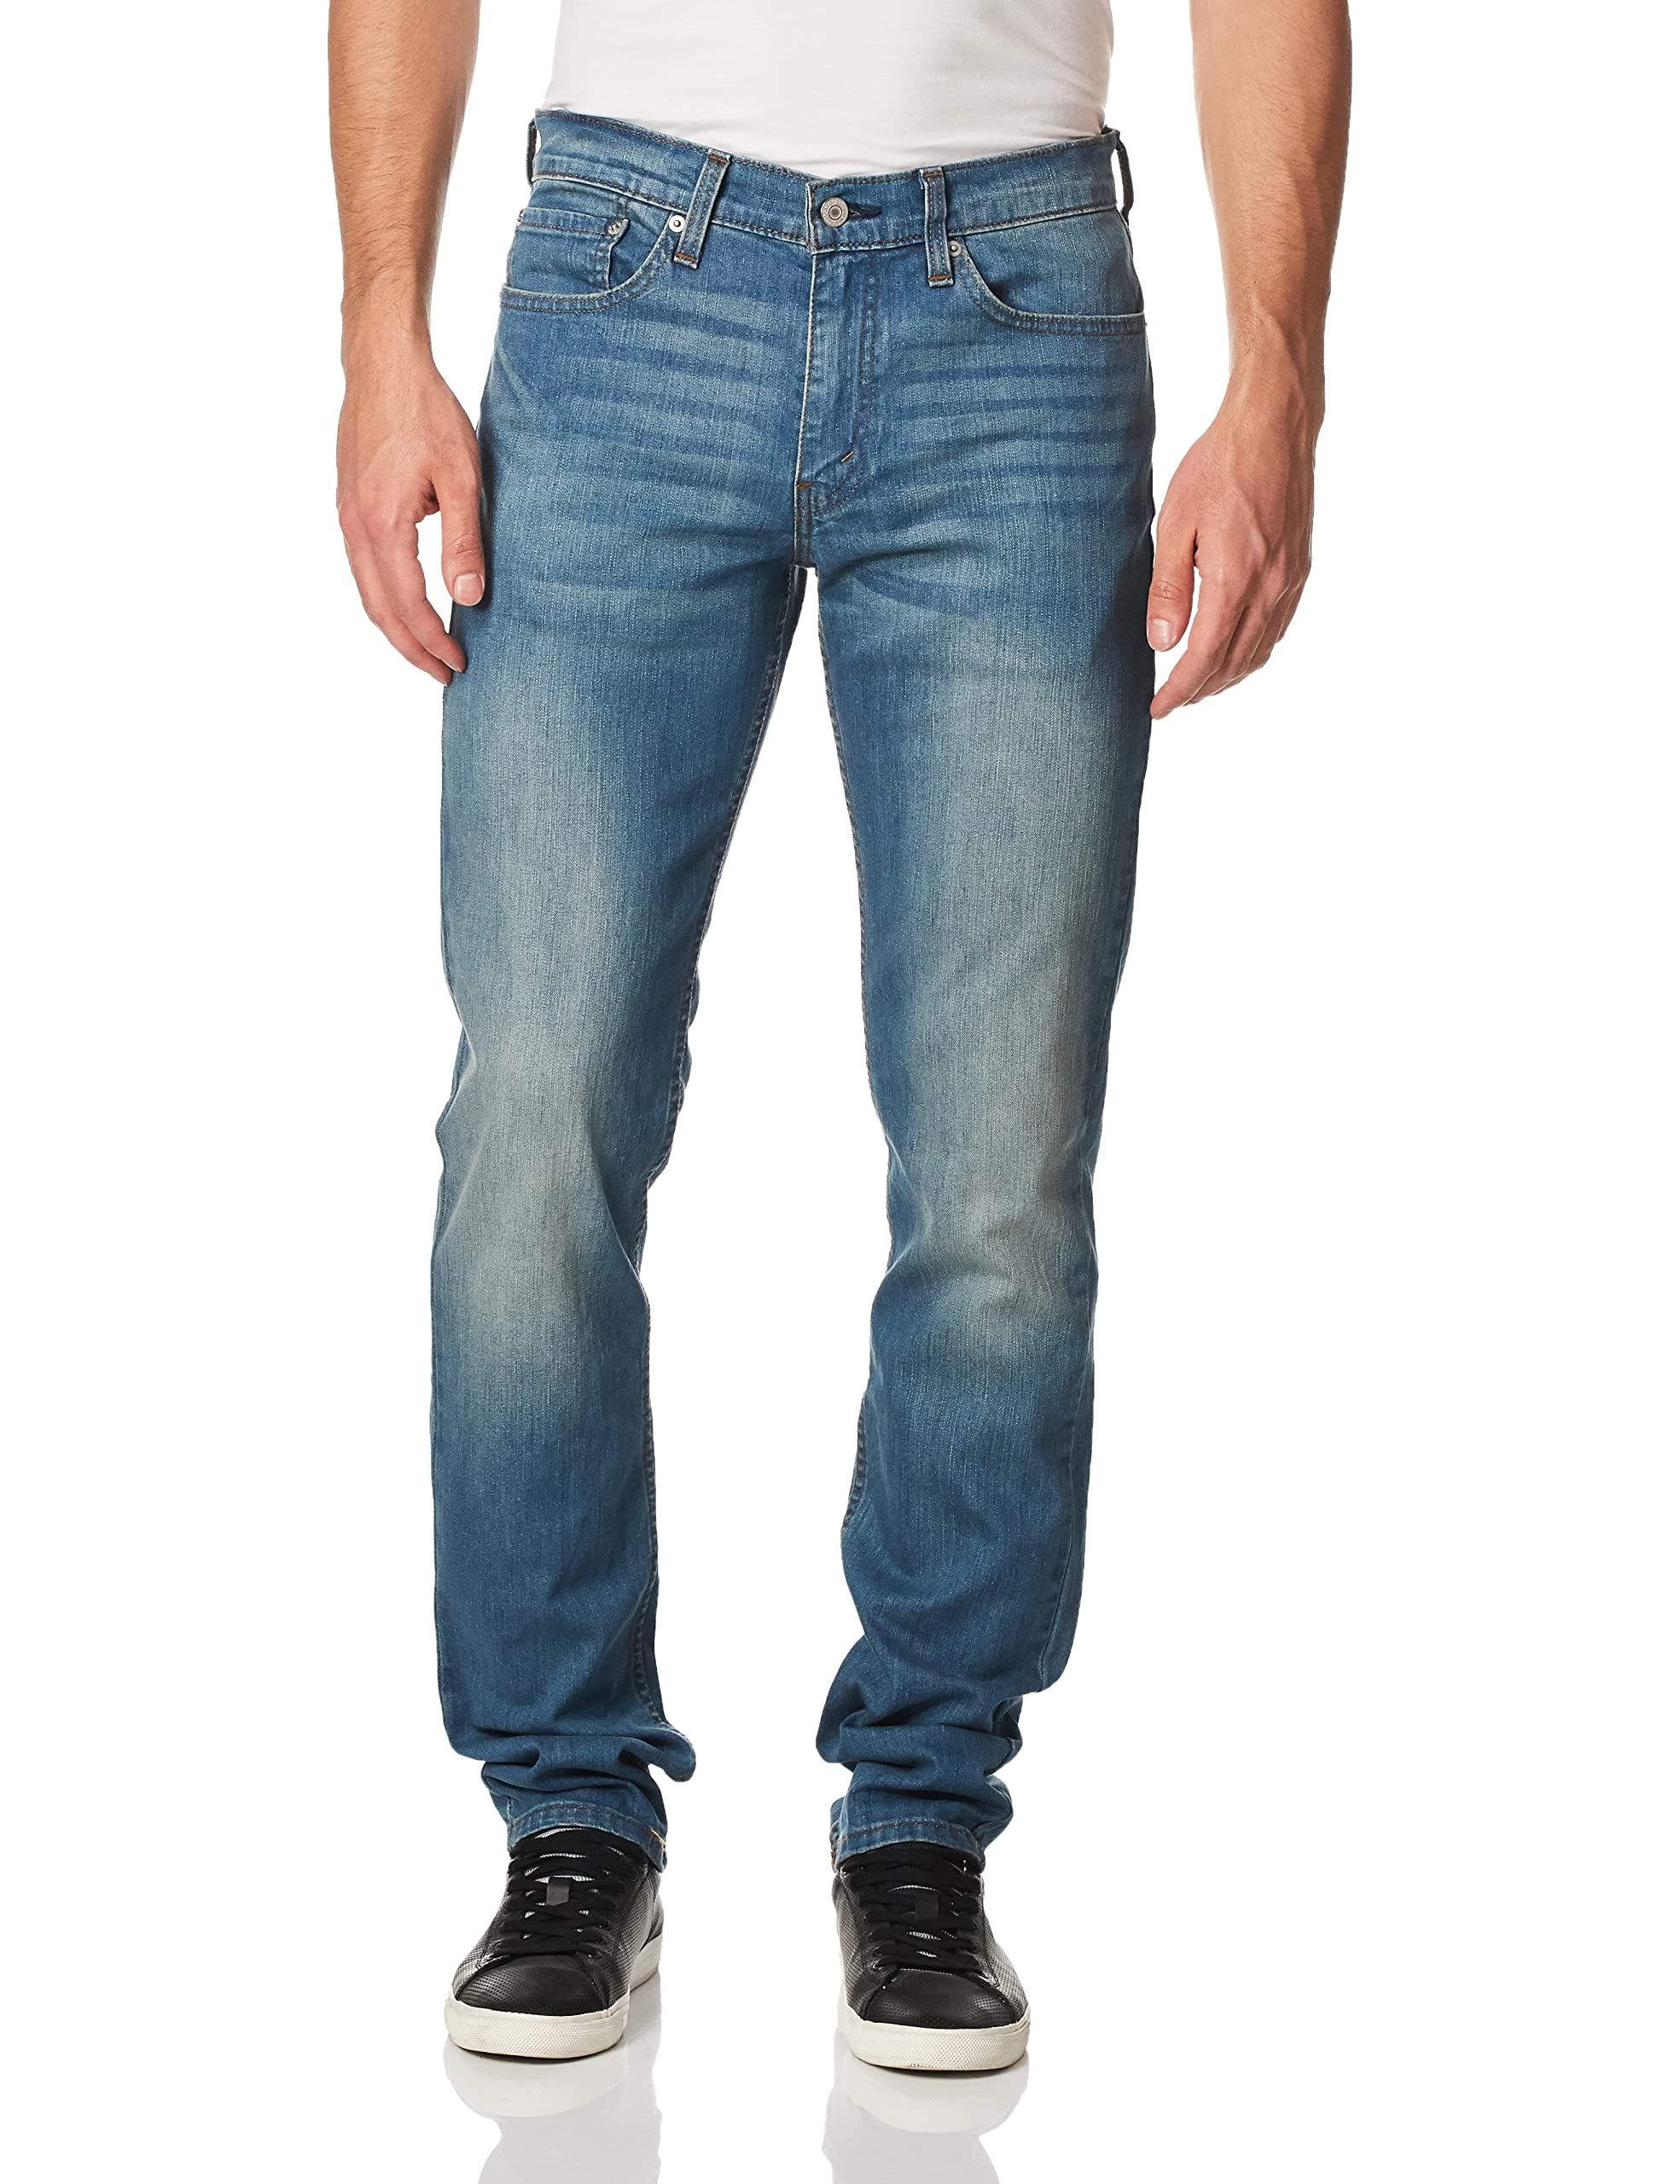 Levi's Men's 511 Slim Fit Stretch Jeans